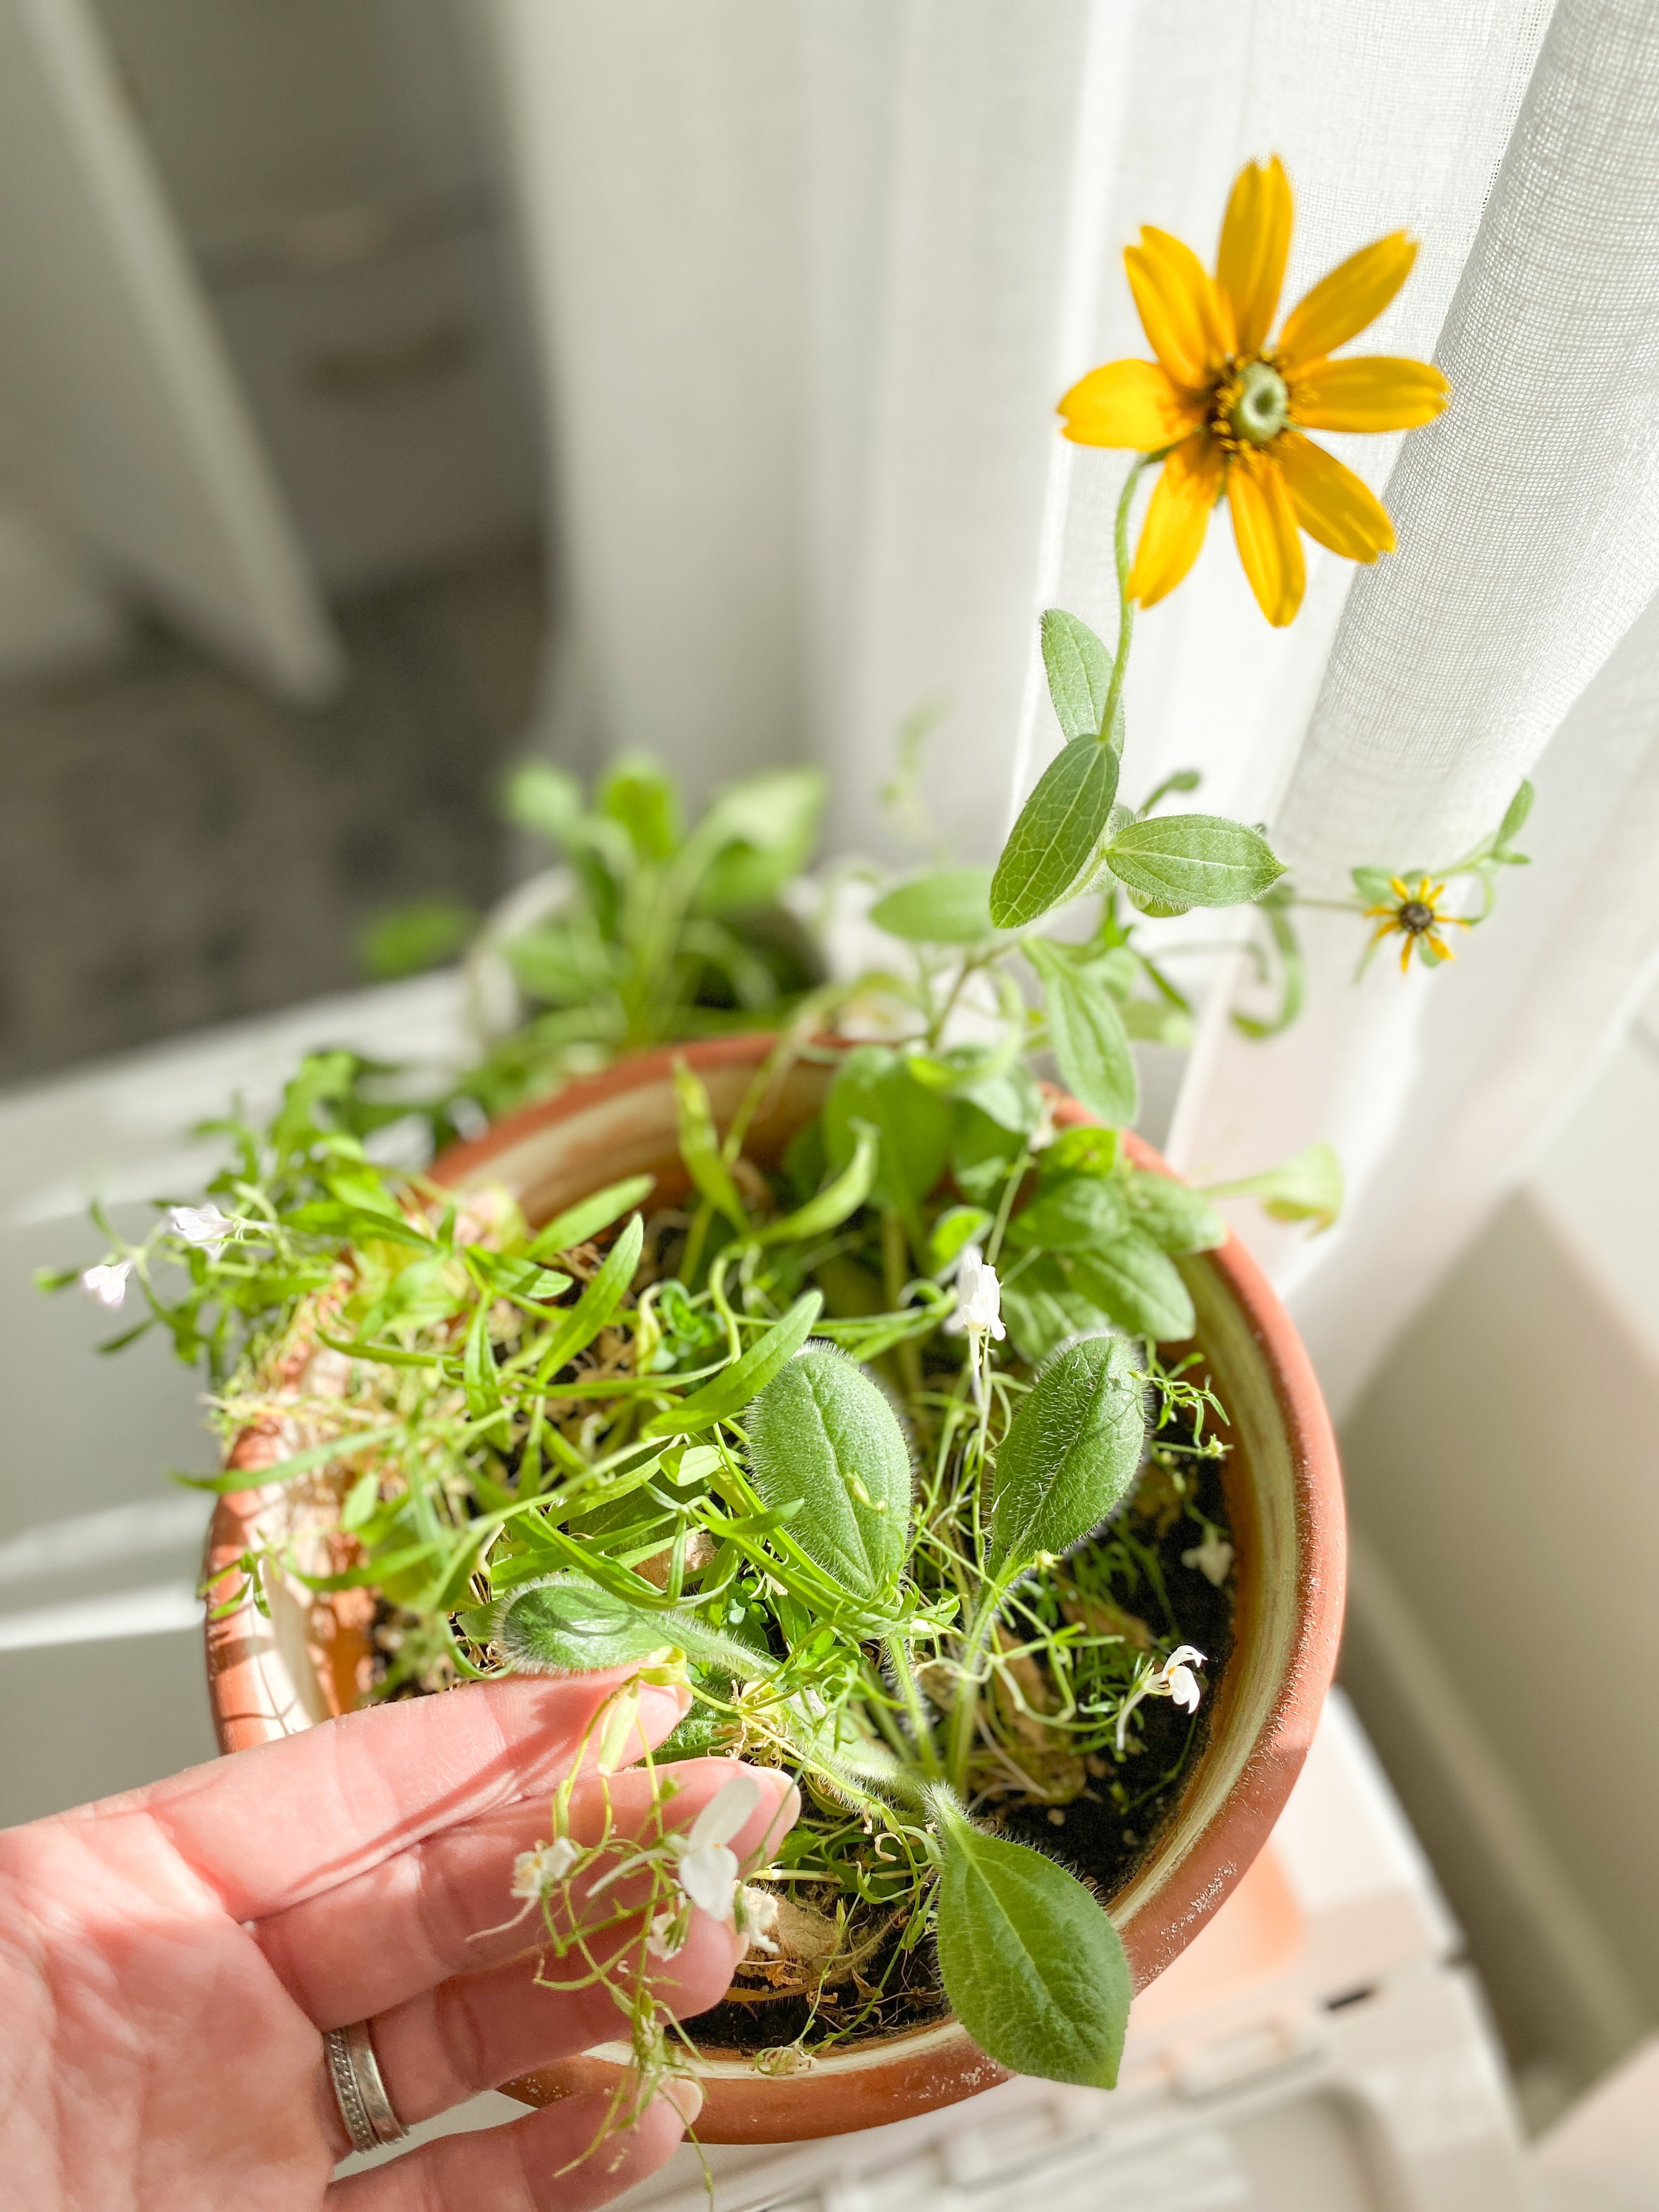 growNOTES™ Wildflower Baby Shower Plantable Invitation - Bright Wildflower Frame